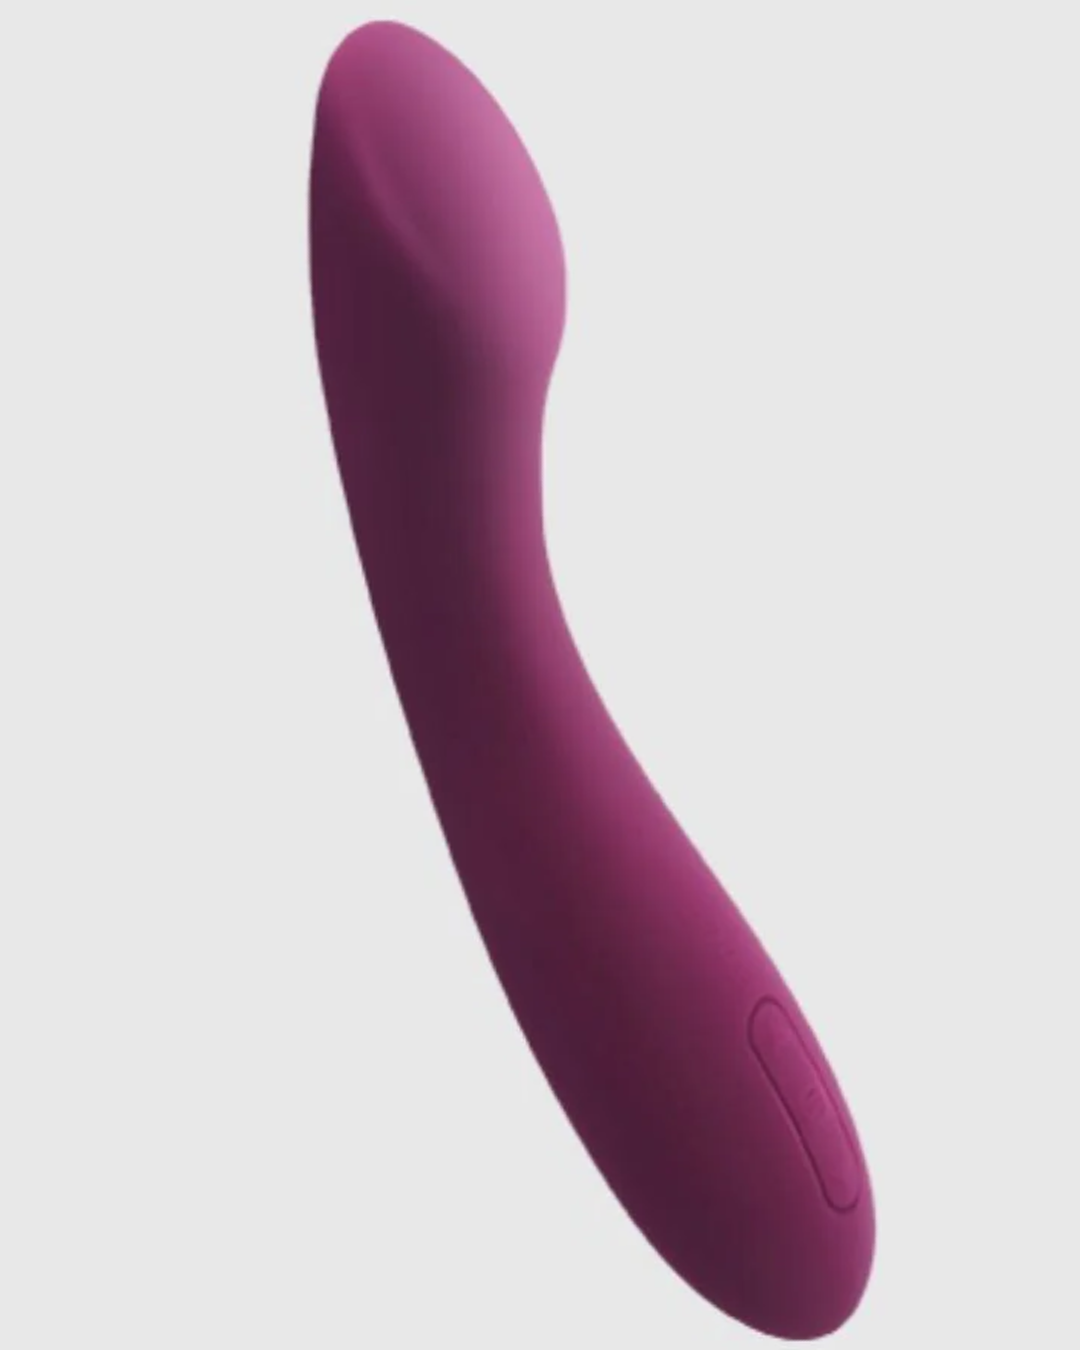 Svakom Amy 2 Flexible G-Spot Vibrator sideview 